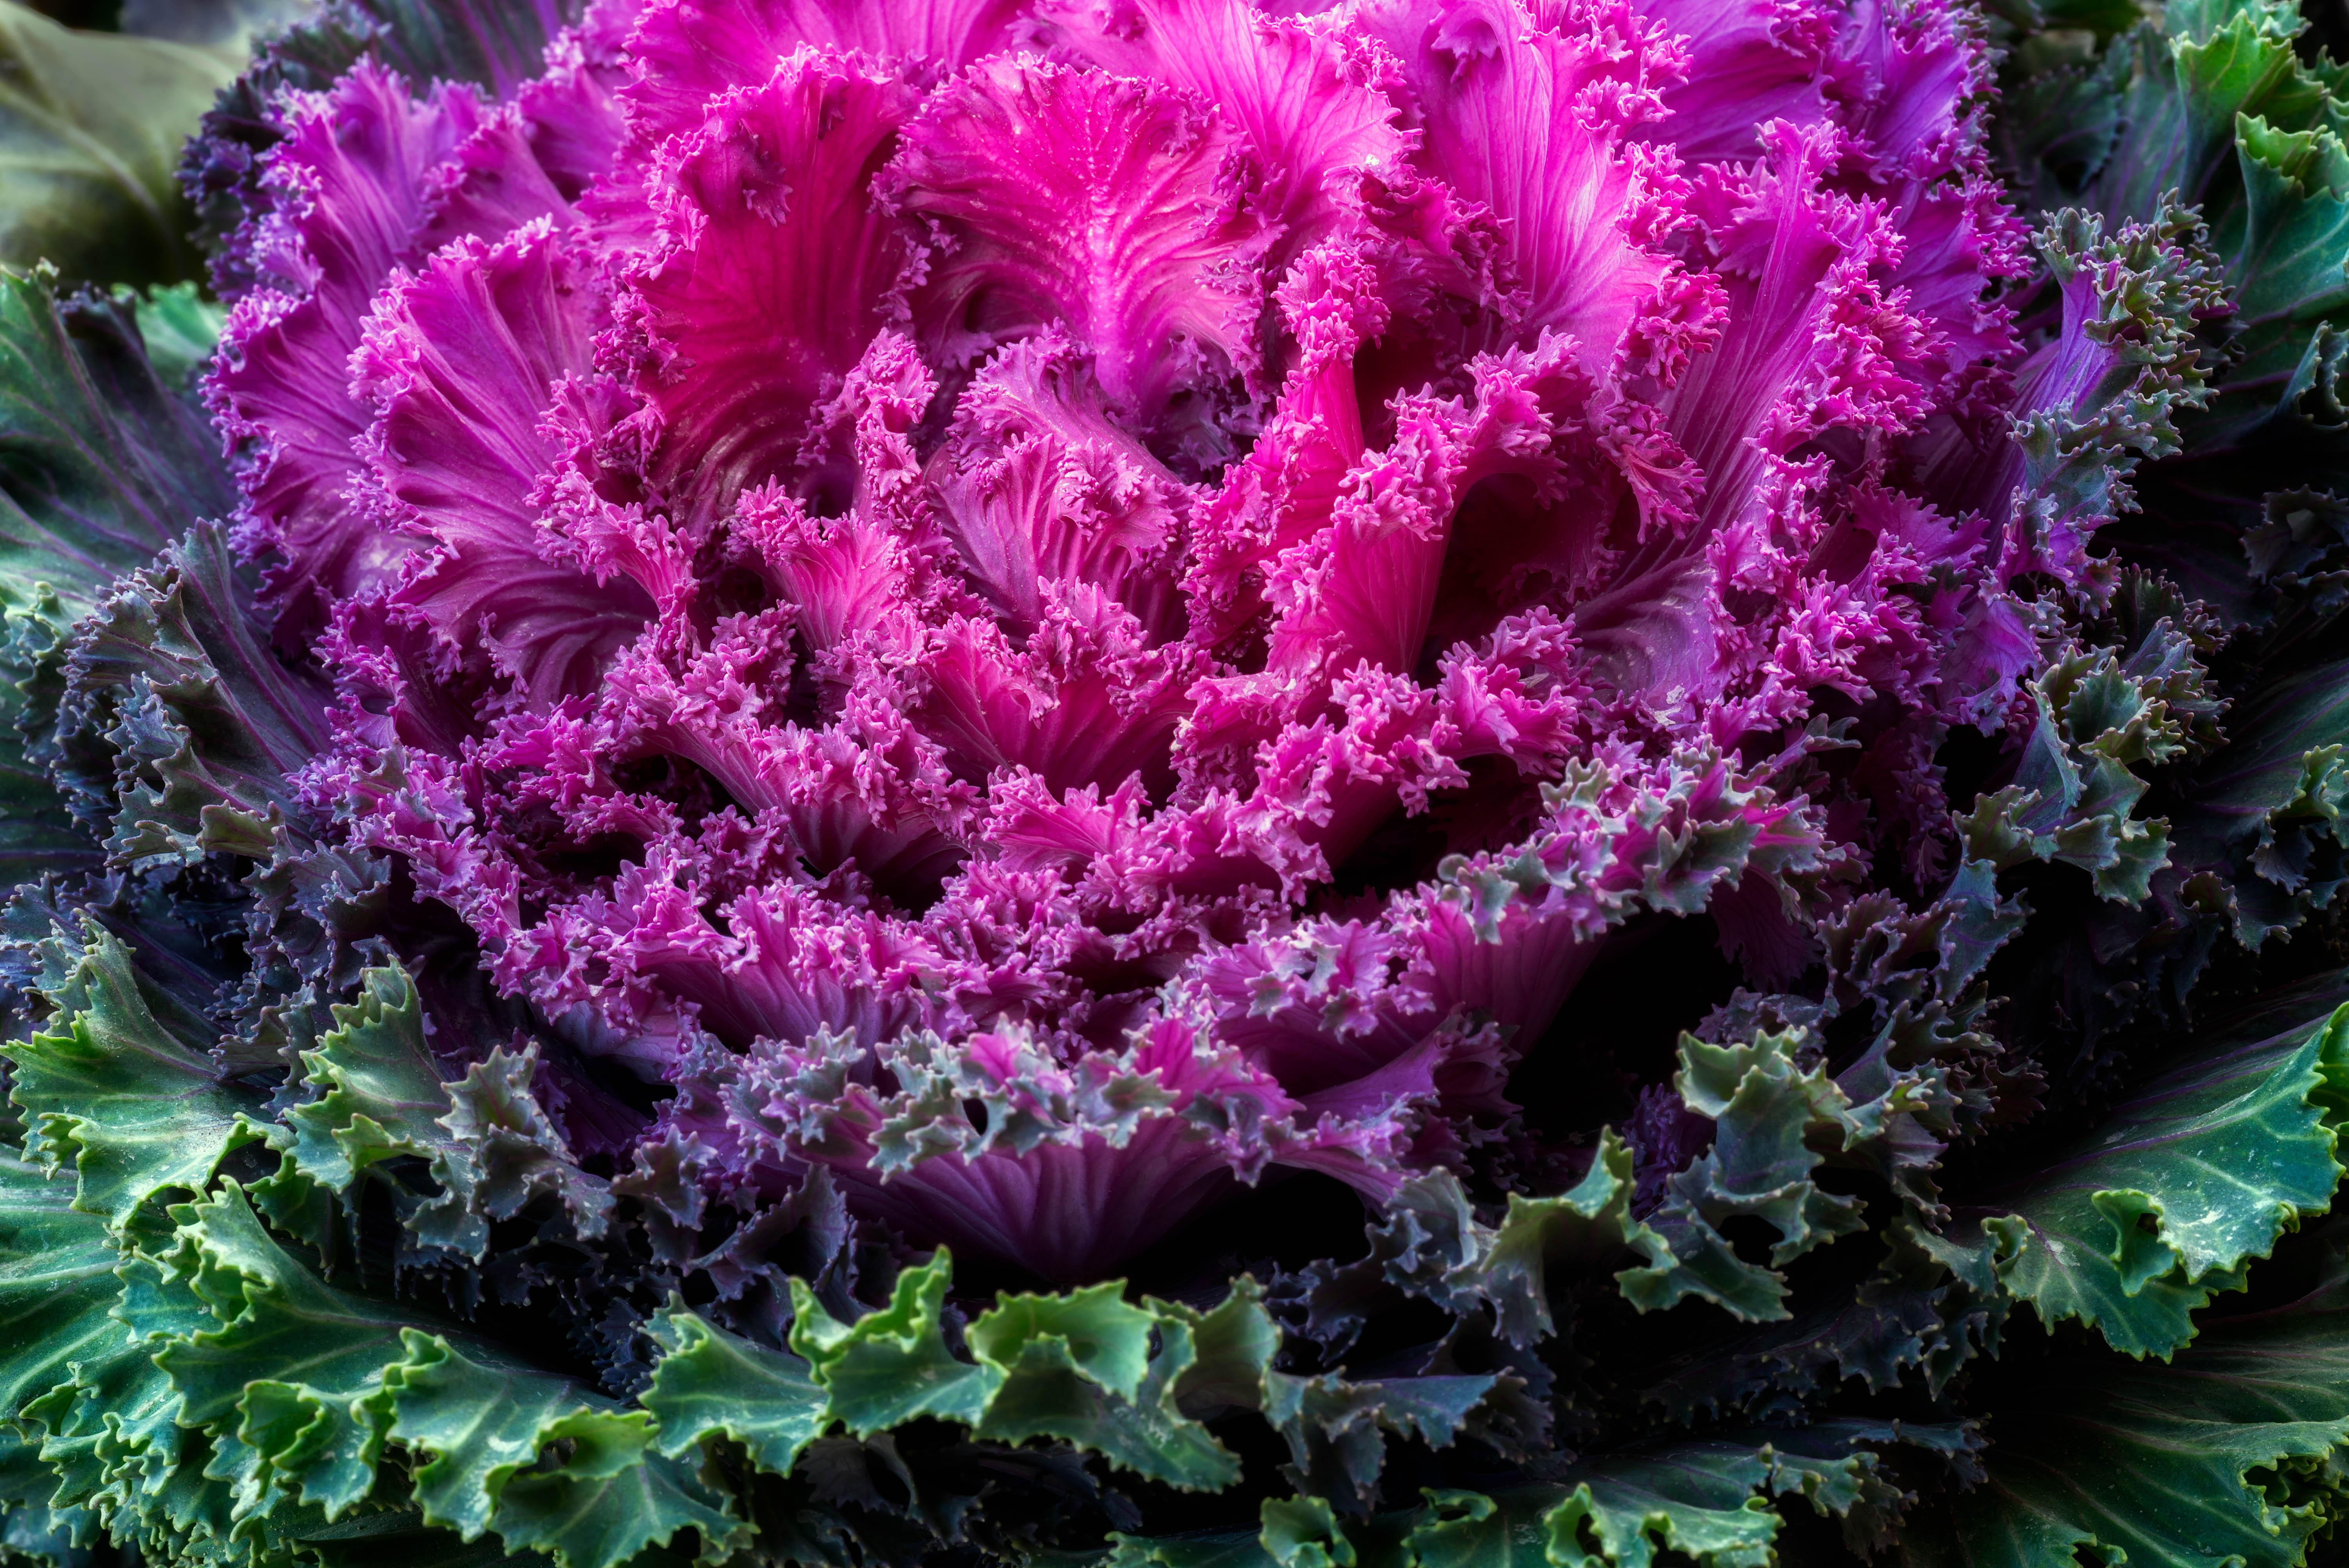 Purple ornamental cabbage, jpeg v.1.5 image, E:2609326205